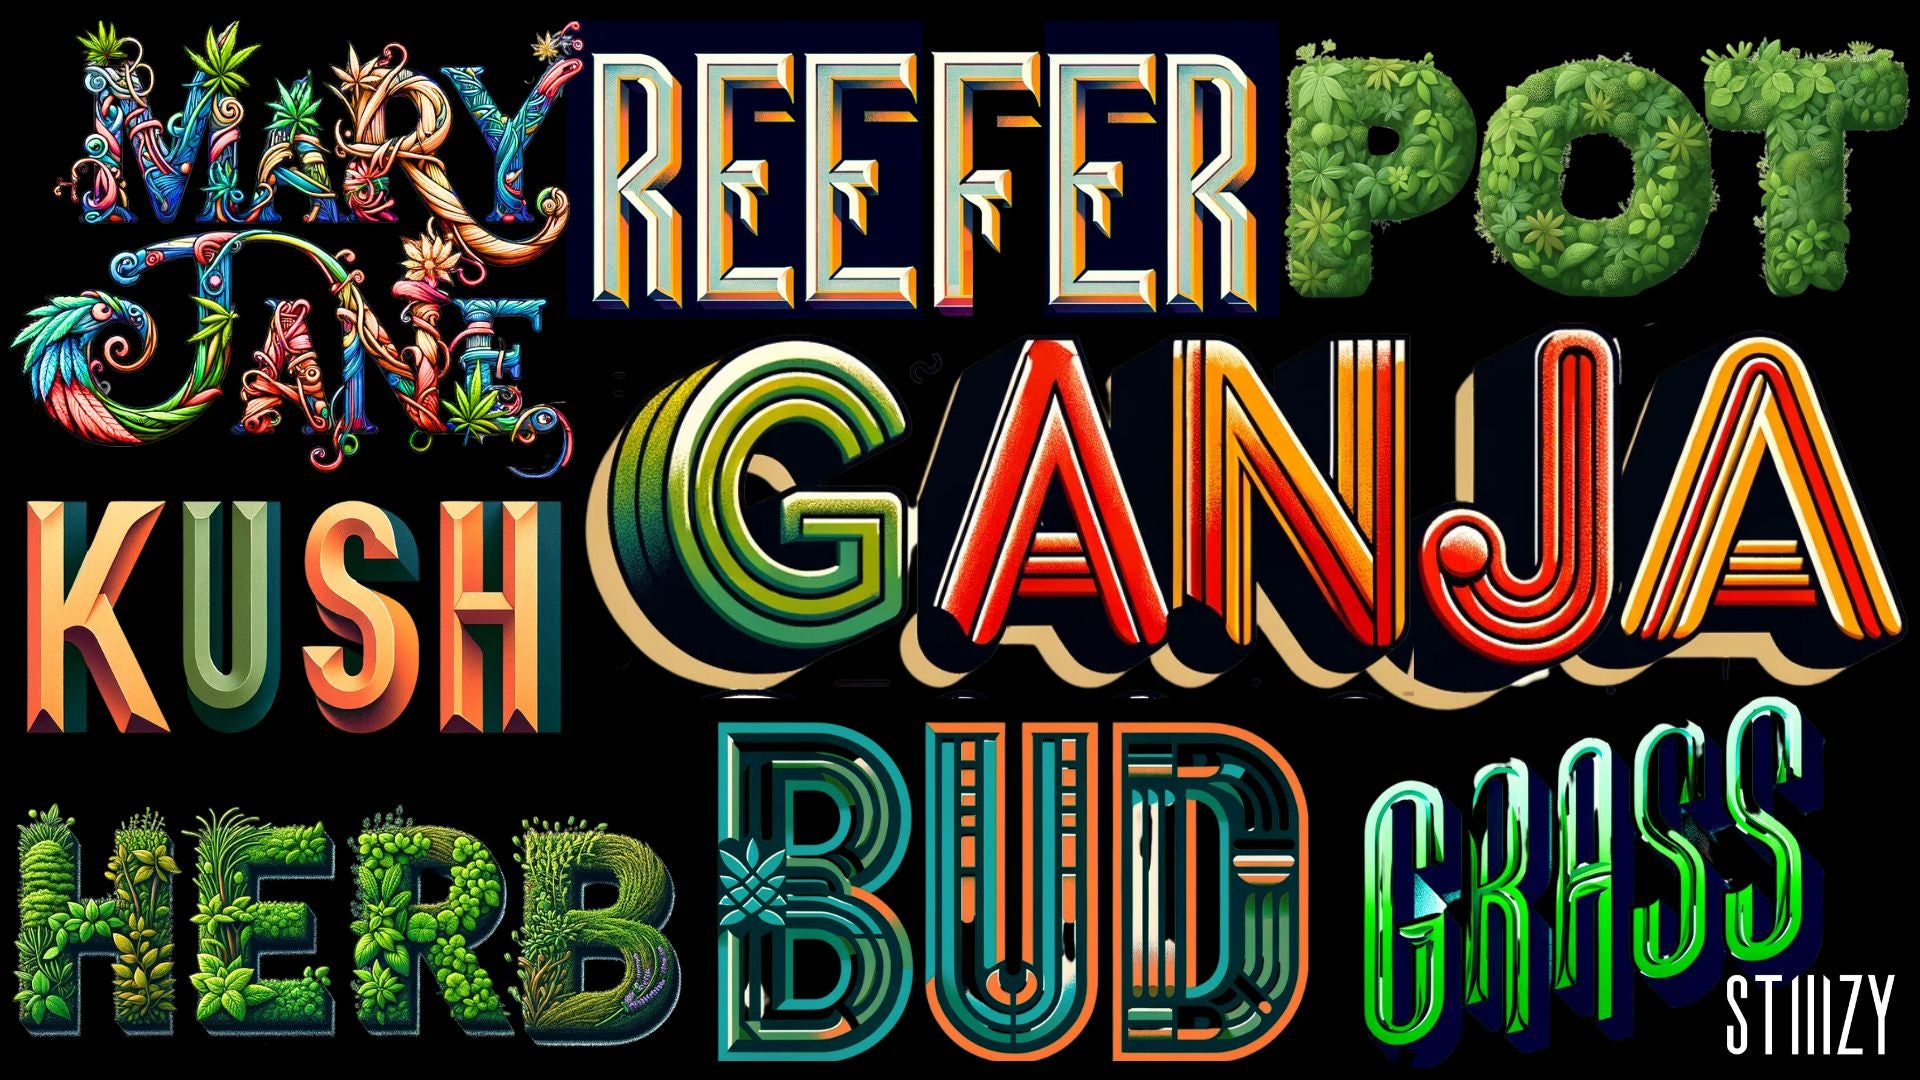 cannabis slang terms